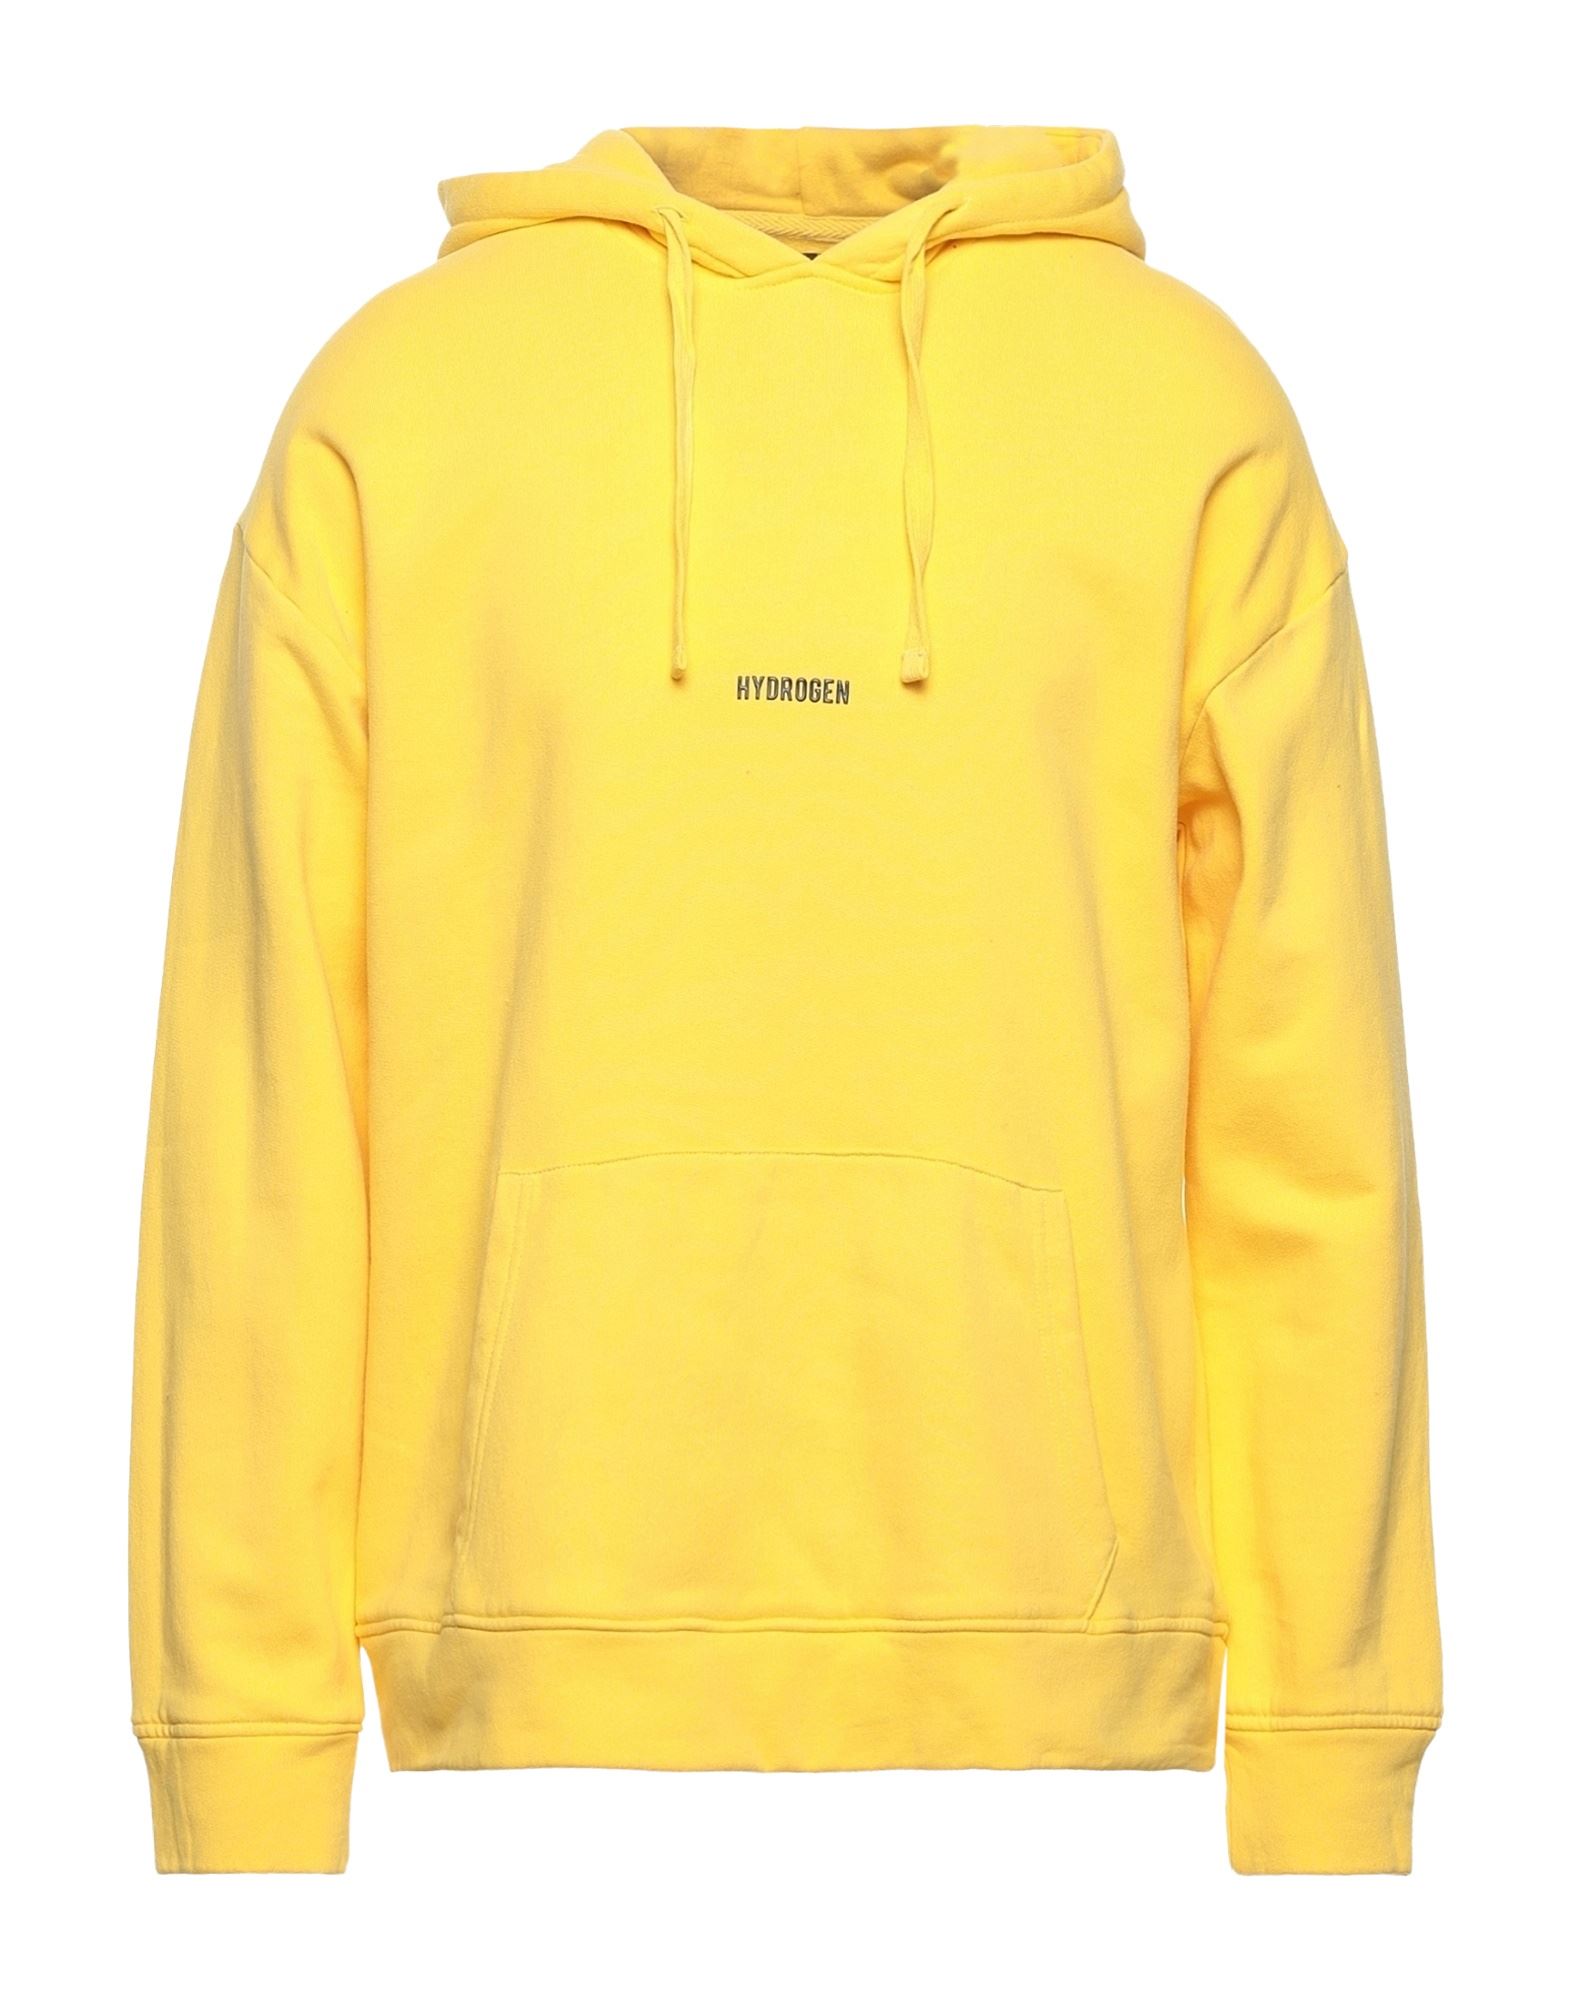 Hydrogen Sweatshirts In Yellow